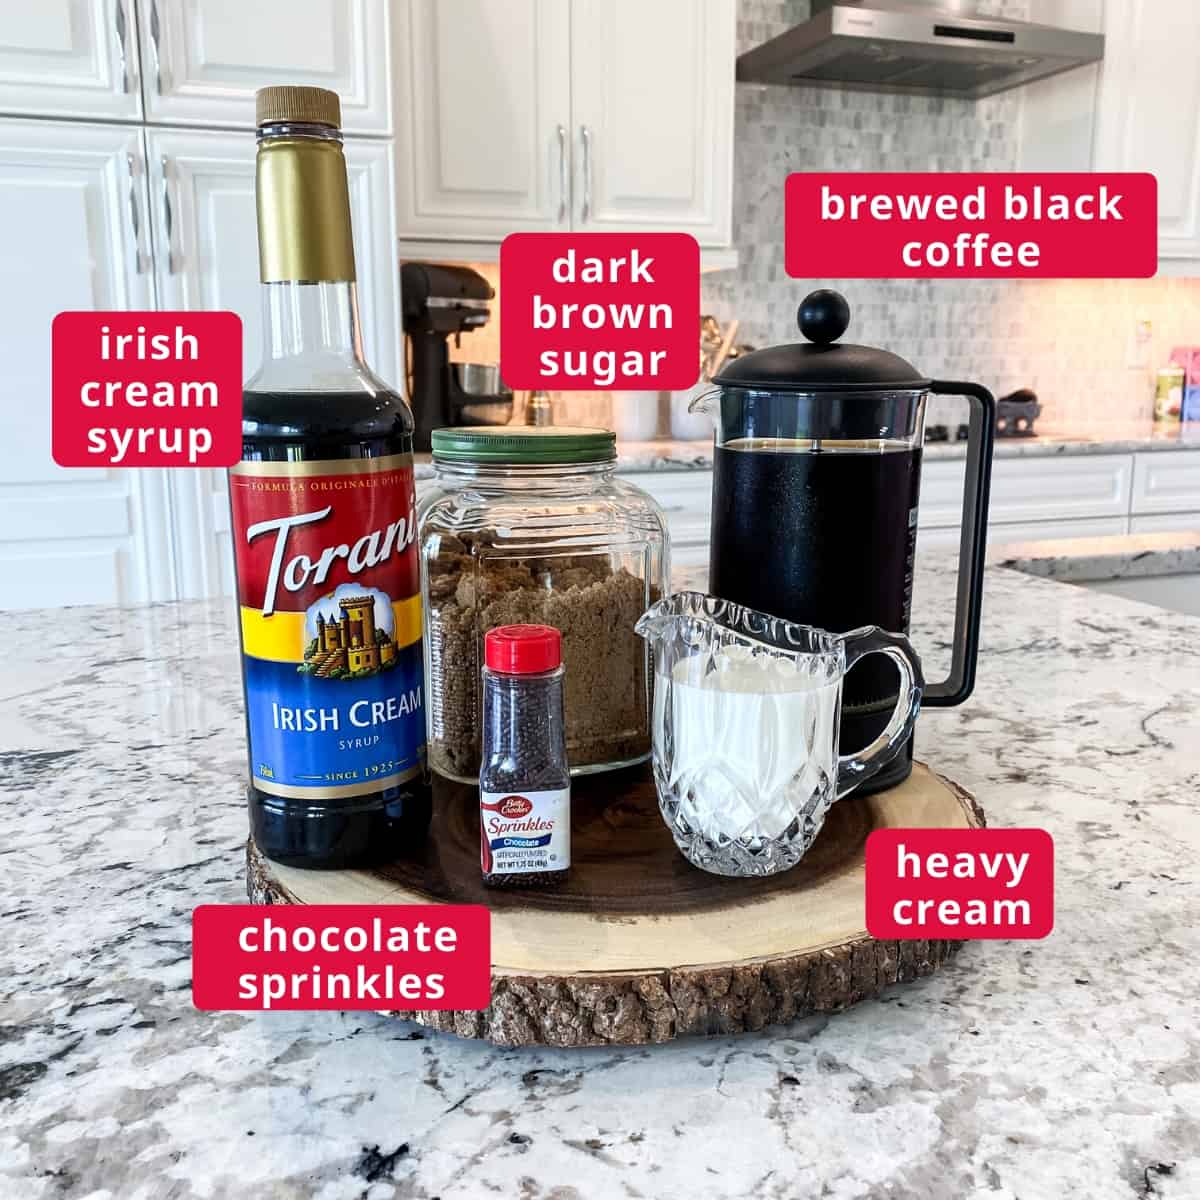 Ingredients on a cut log board, clockwise from top right: Brewed black coffee, heavy cream, chocolate sprinkles, irish cream syrup, dark brown sugar.